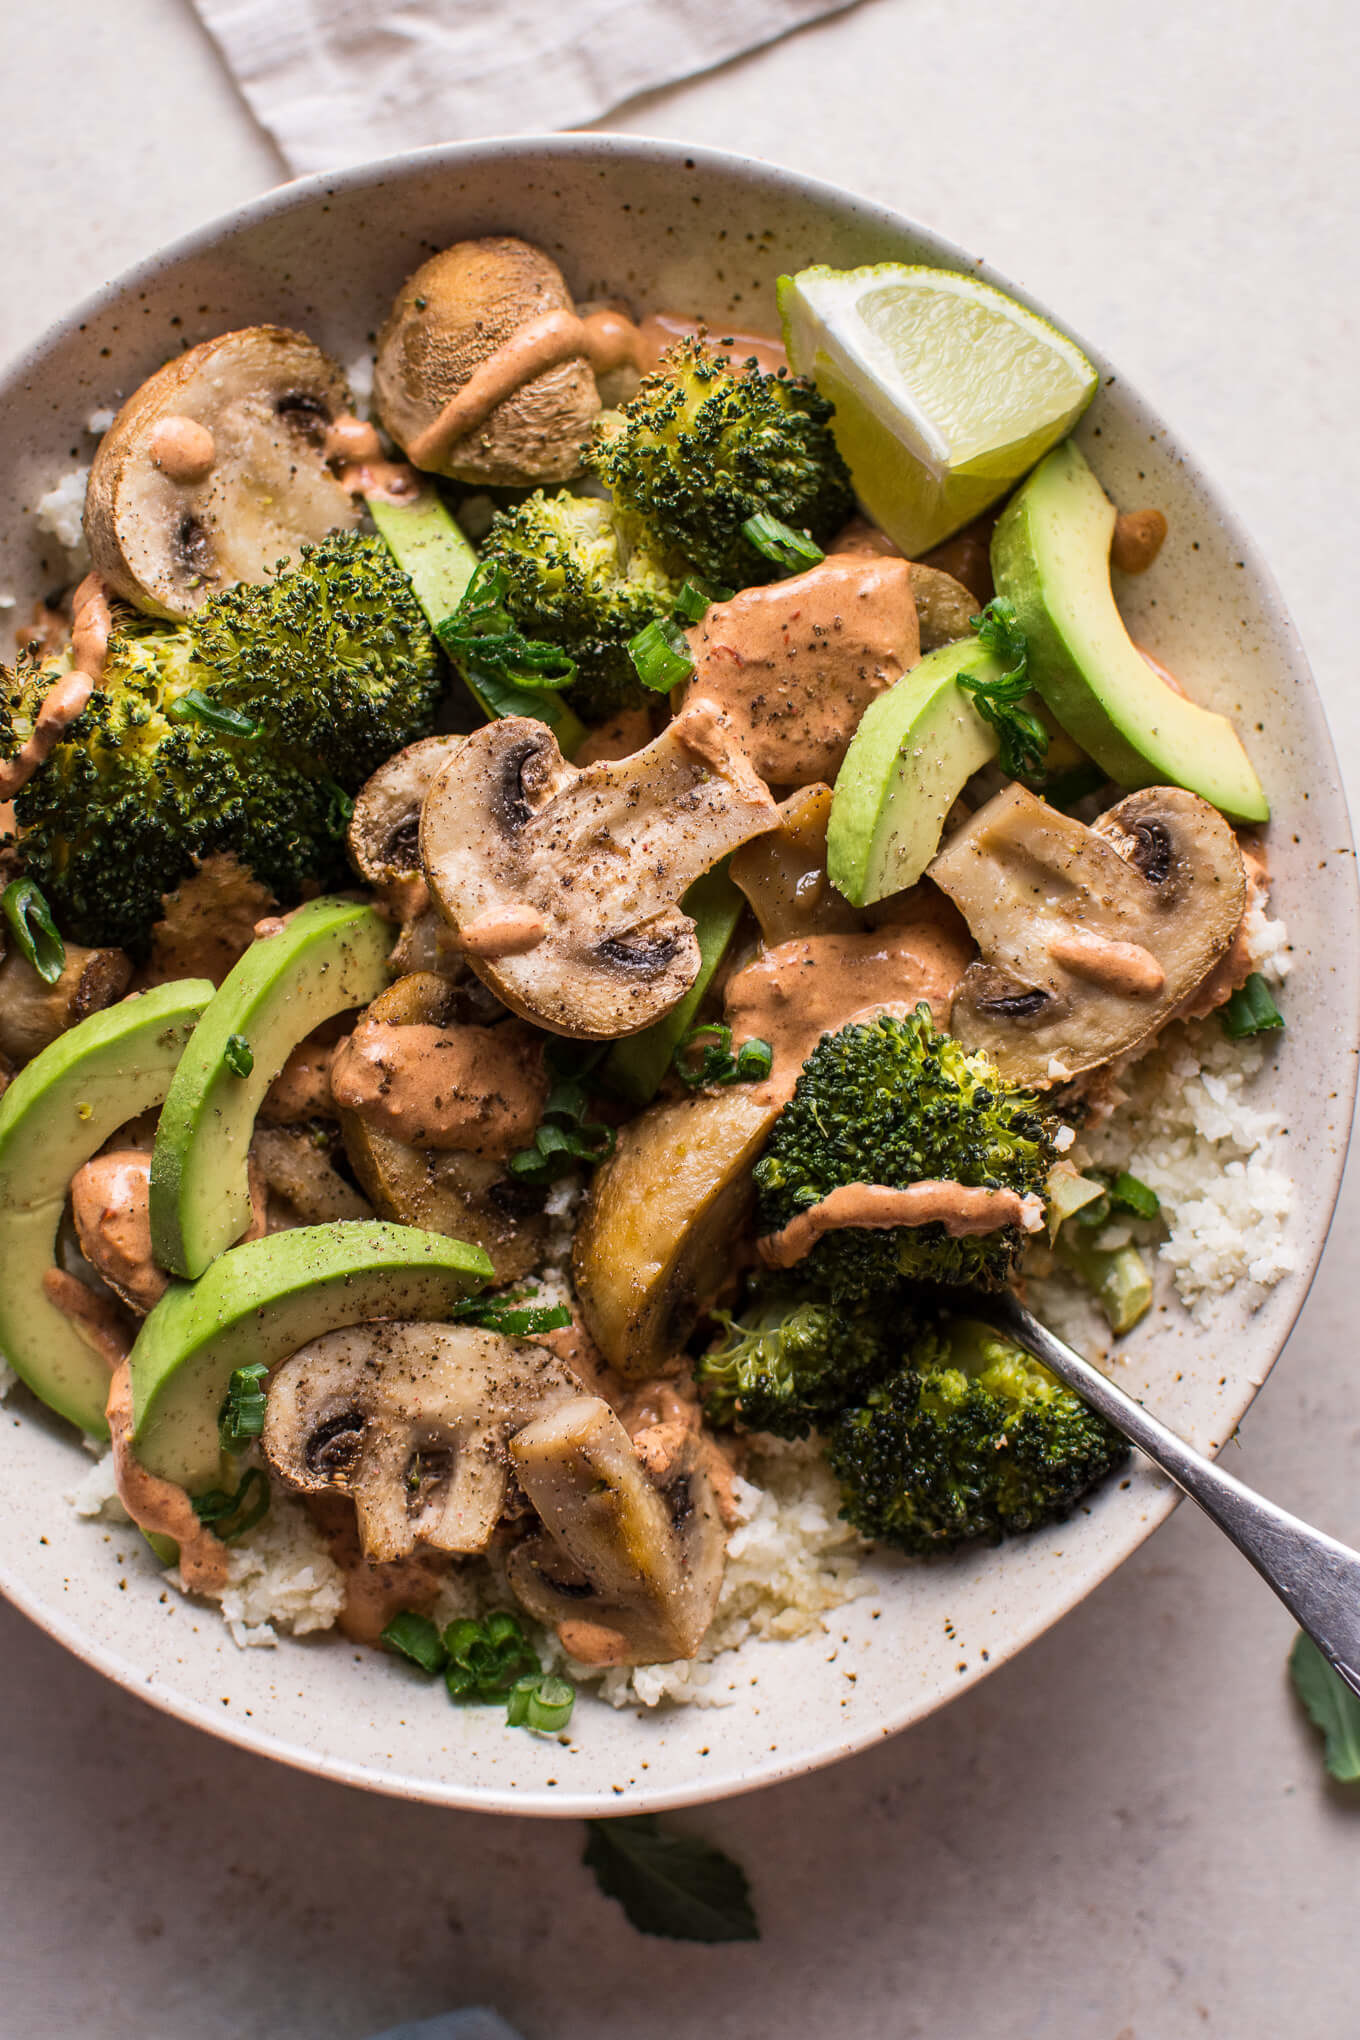 cauliflower rice topped with mushrooms, broccoli, and avocado